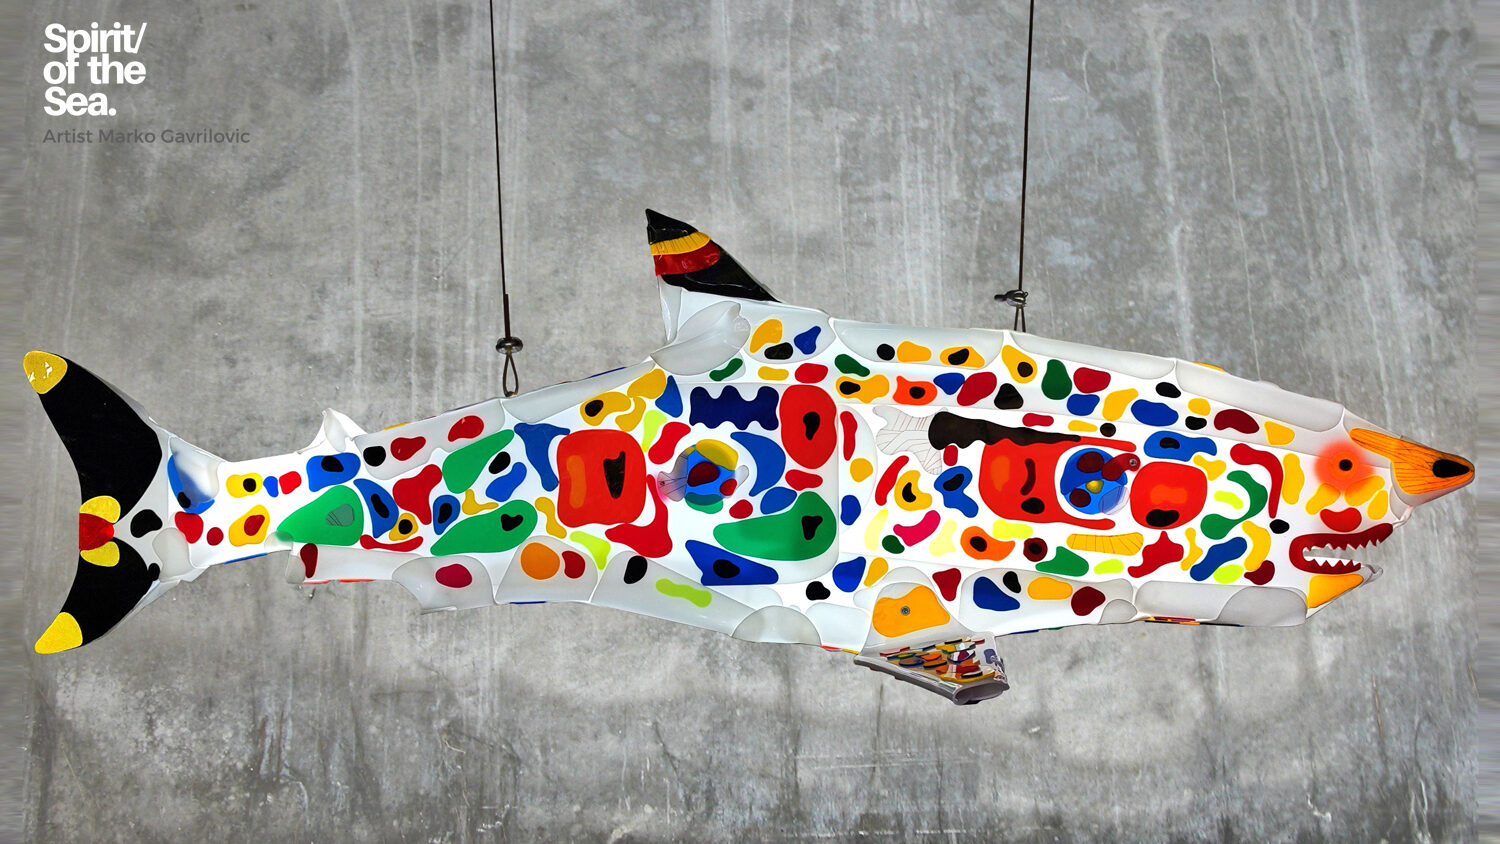 Spirit of the Sea, shark sculpture by artist Marko Gavrilovic